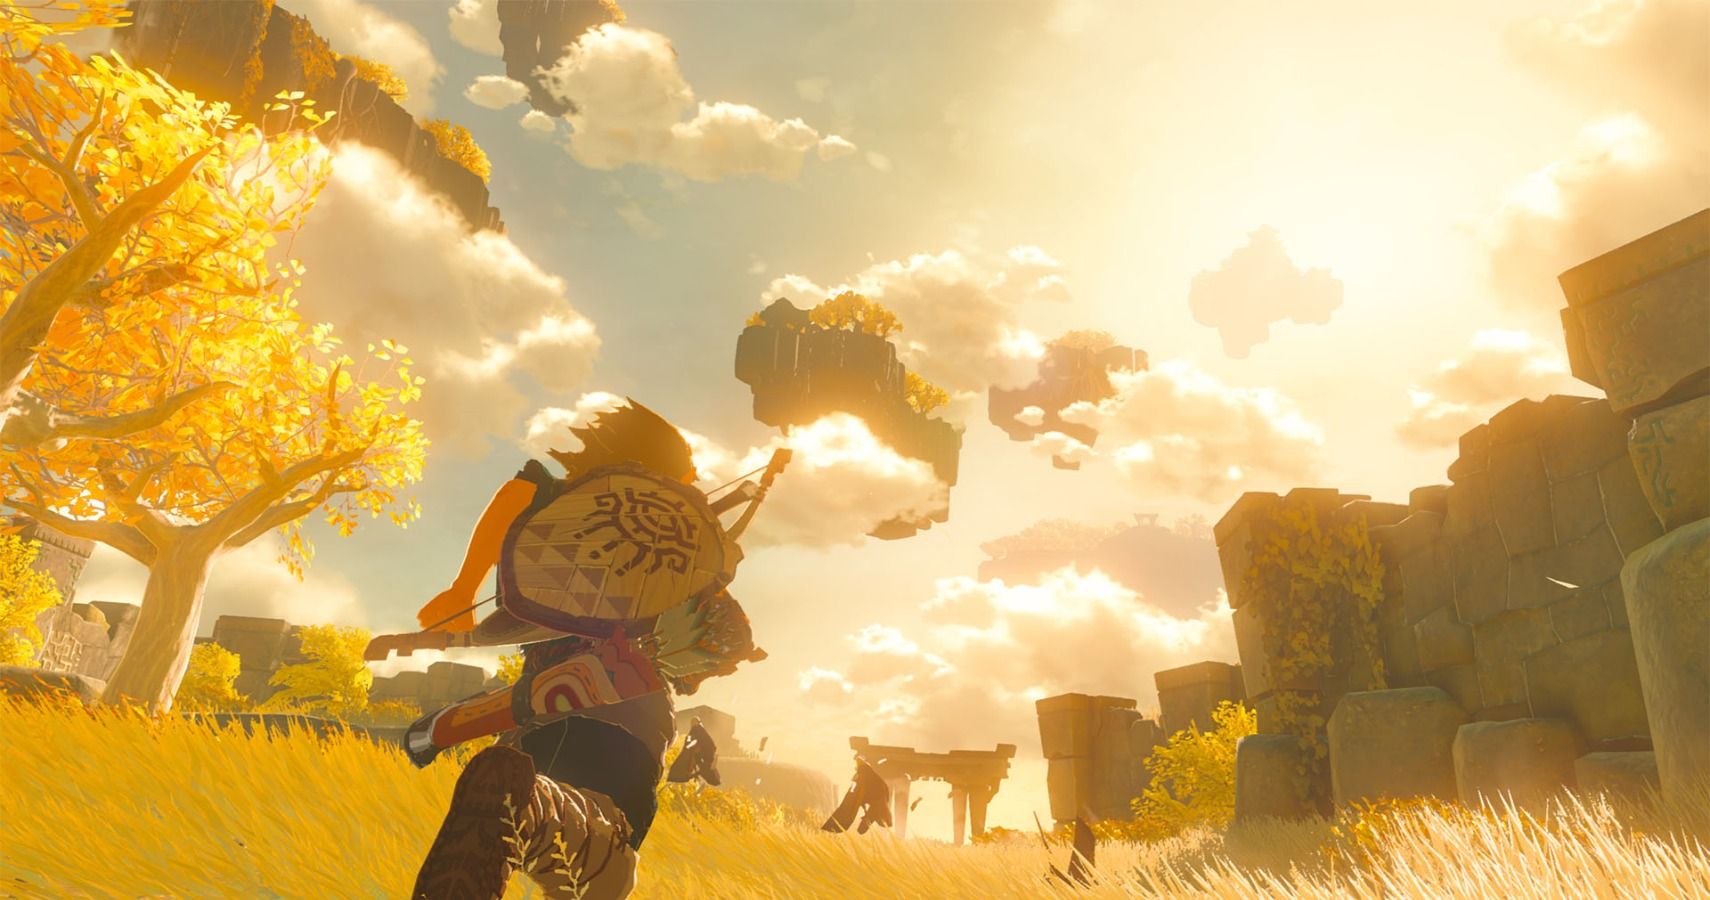 The Art of The Legend of Zelda Breath of the Wild - 2